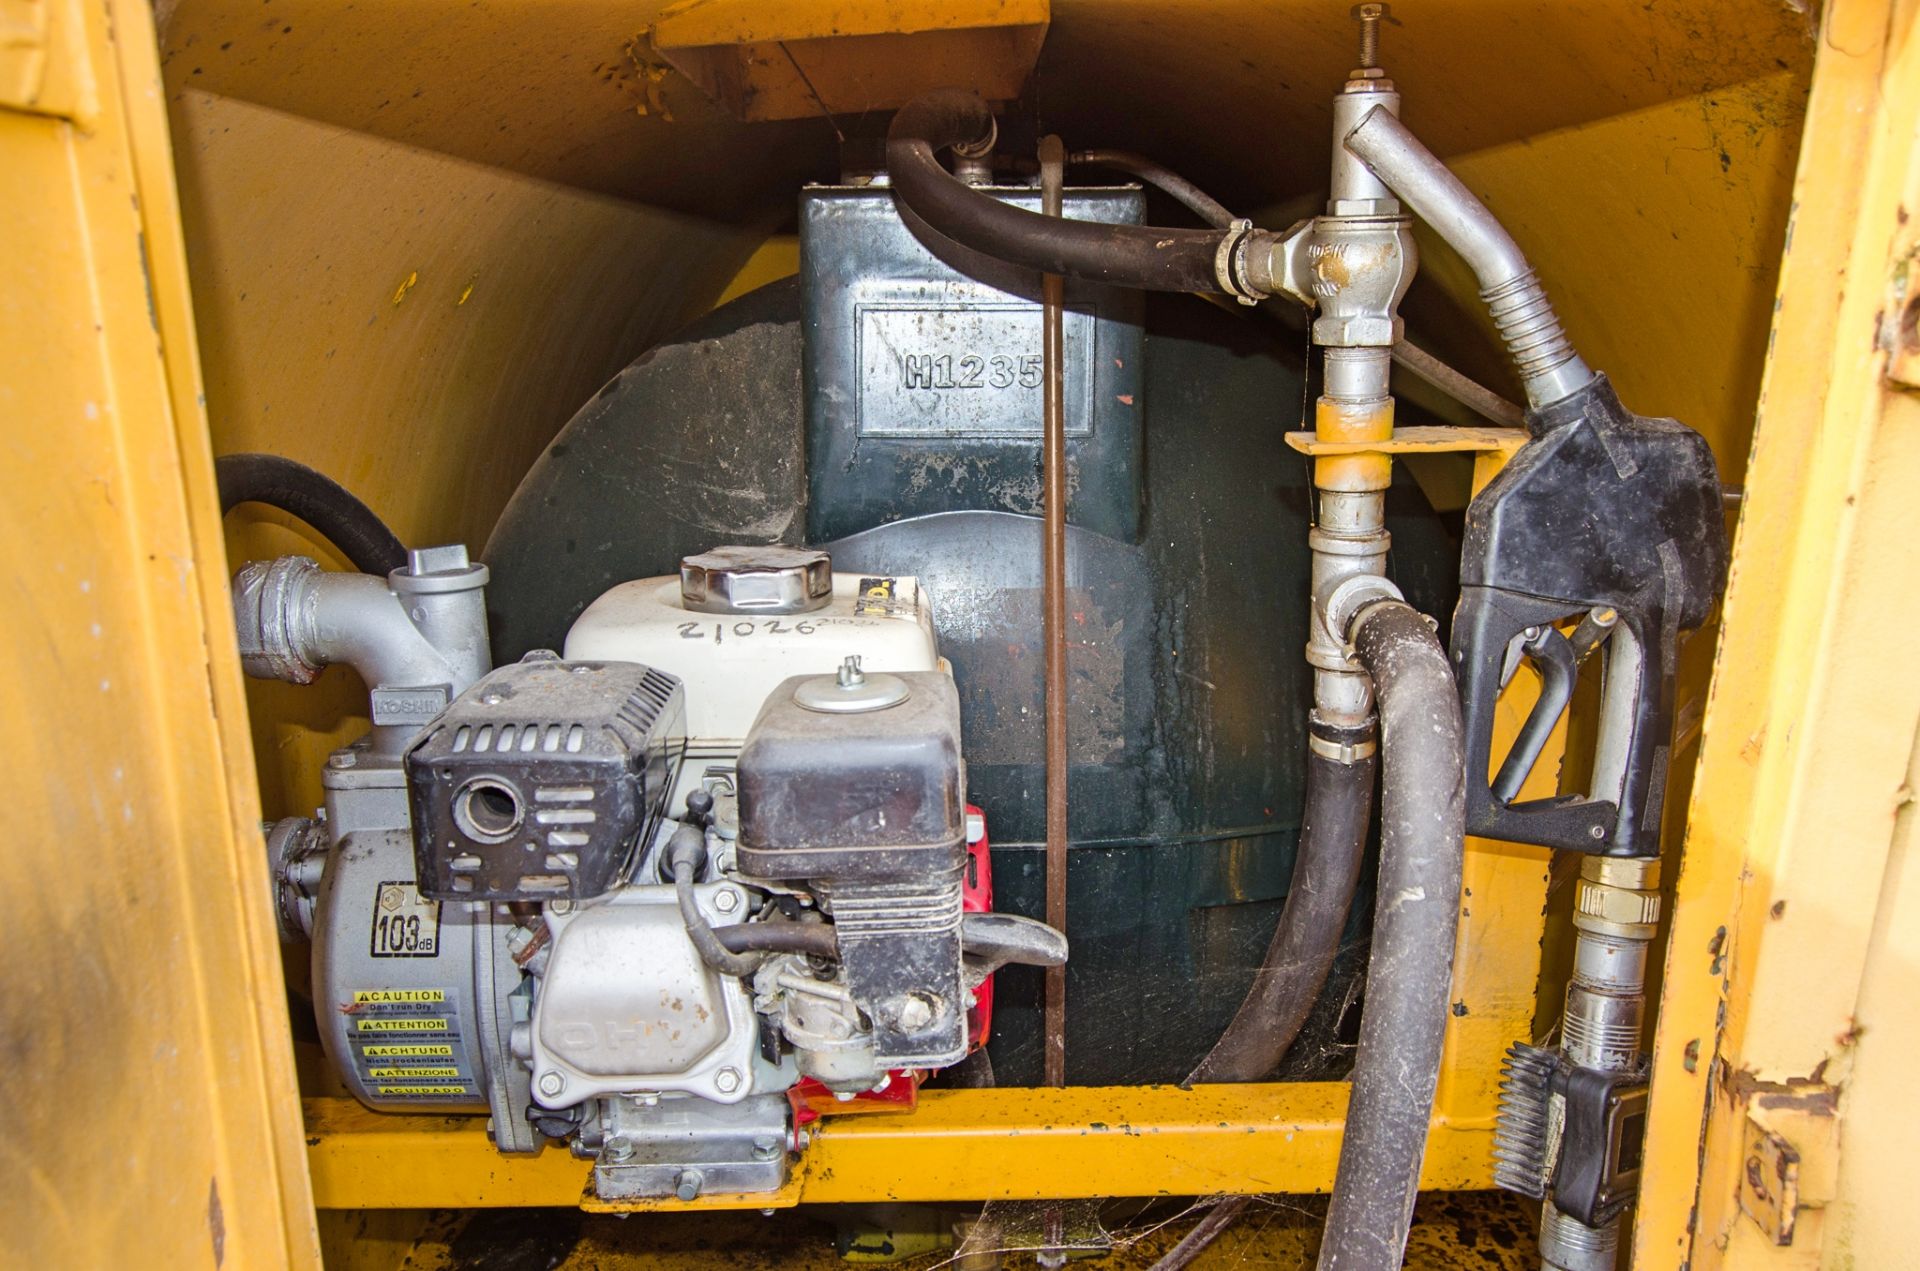 Fuel safe 1235 litre bunded fuel bowser c/w petrol driven pump, delivery hose and nozzle - Image 3 of 3